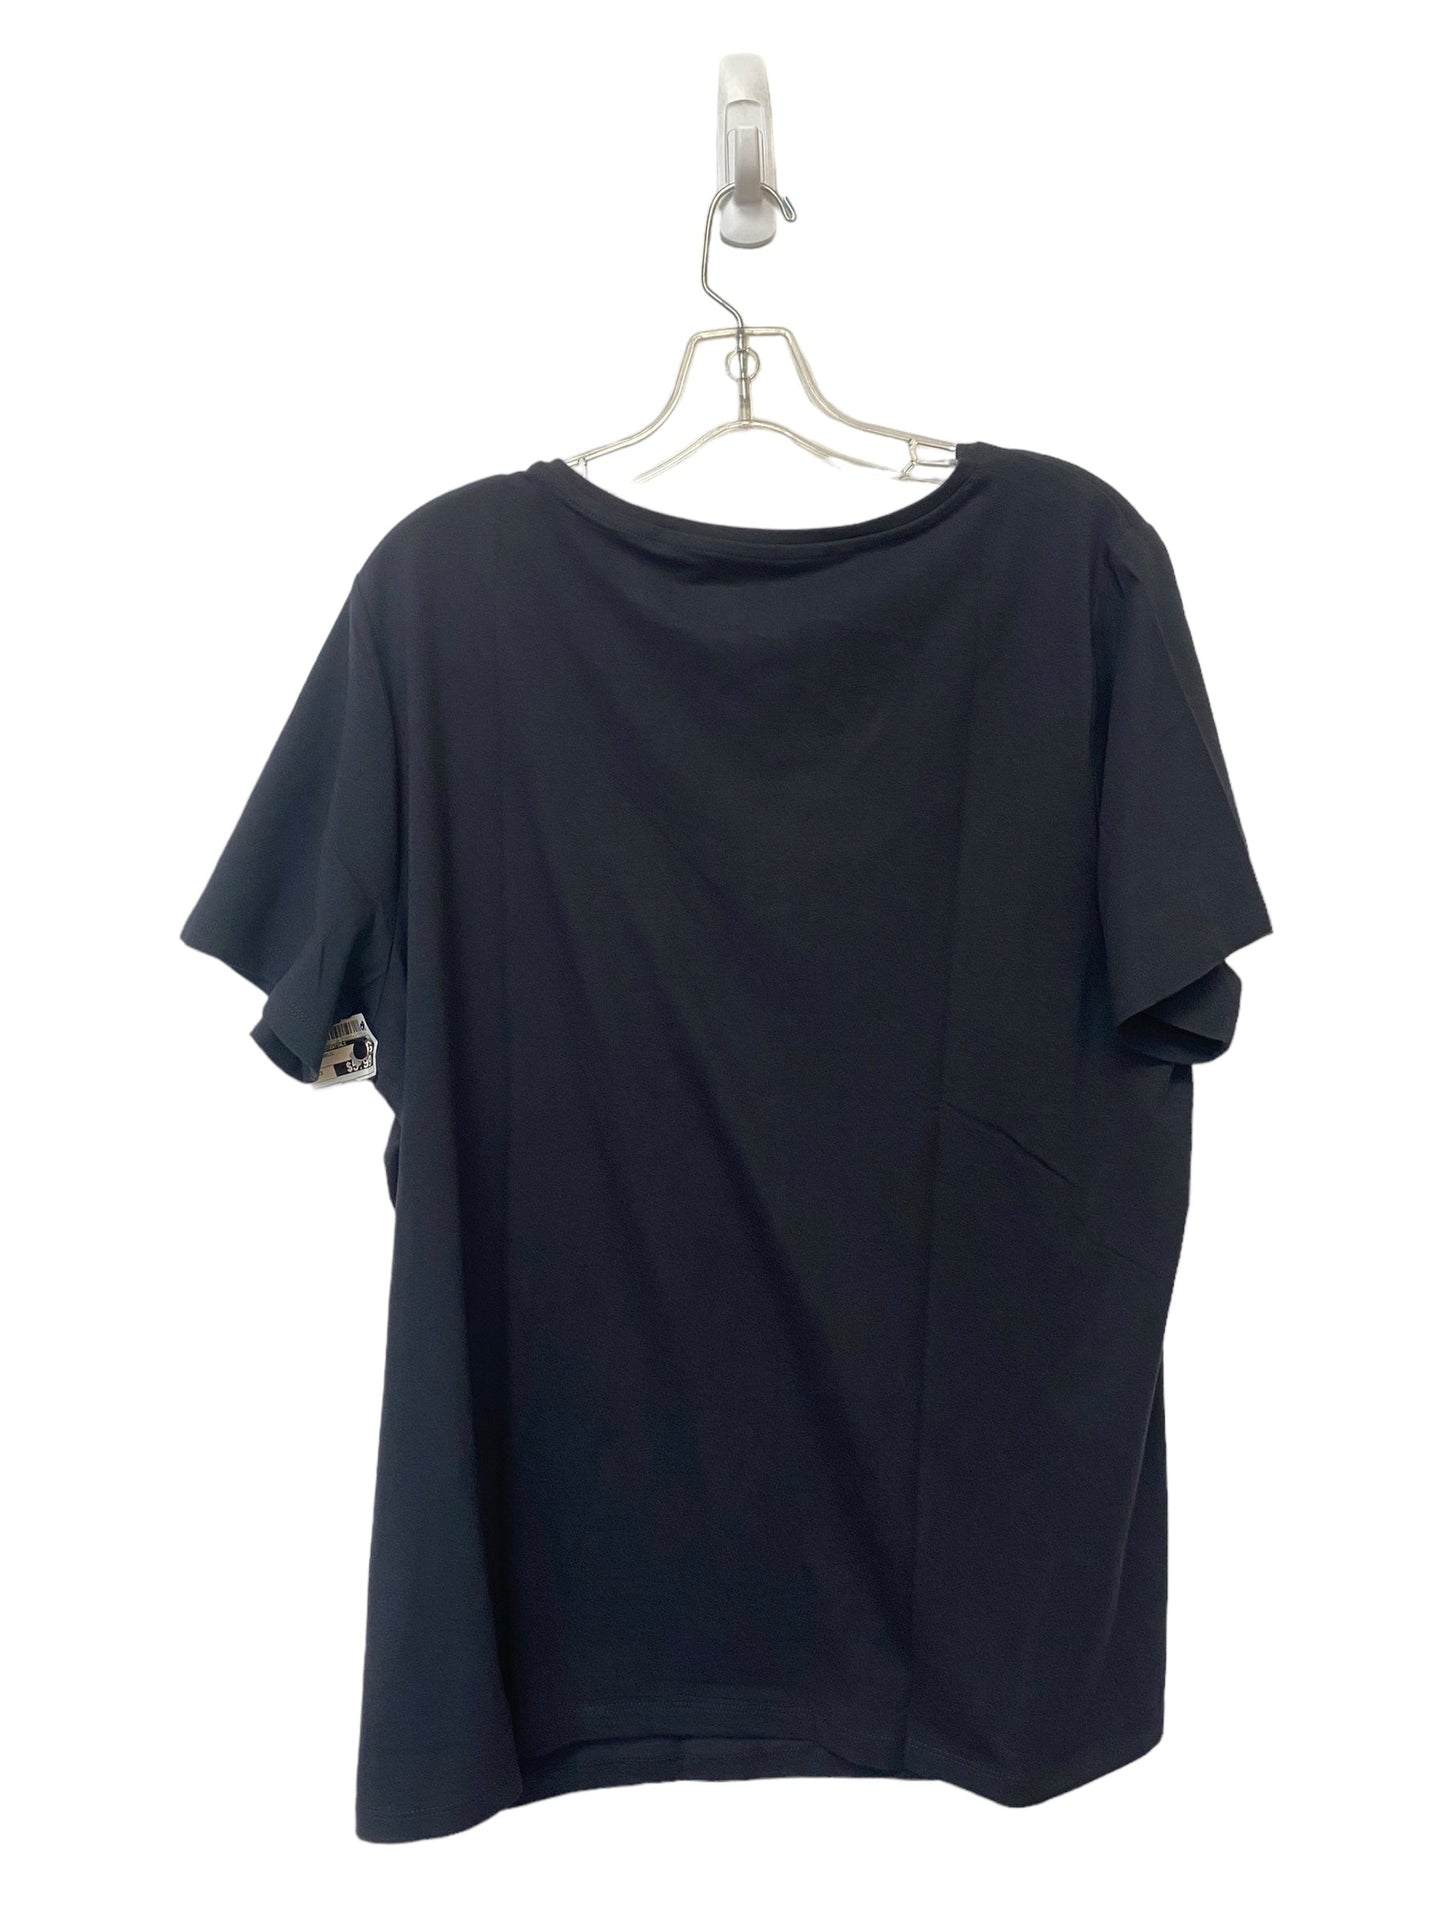 Black Top Short Sleeve Basic Amazon Essentials, Size 2x